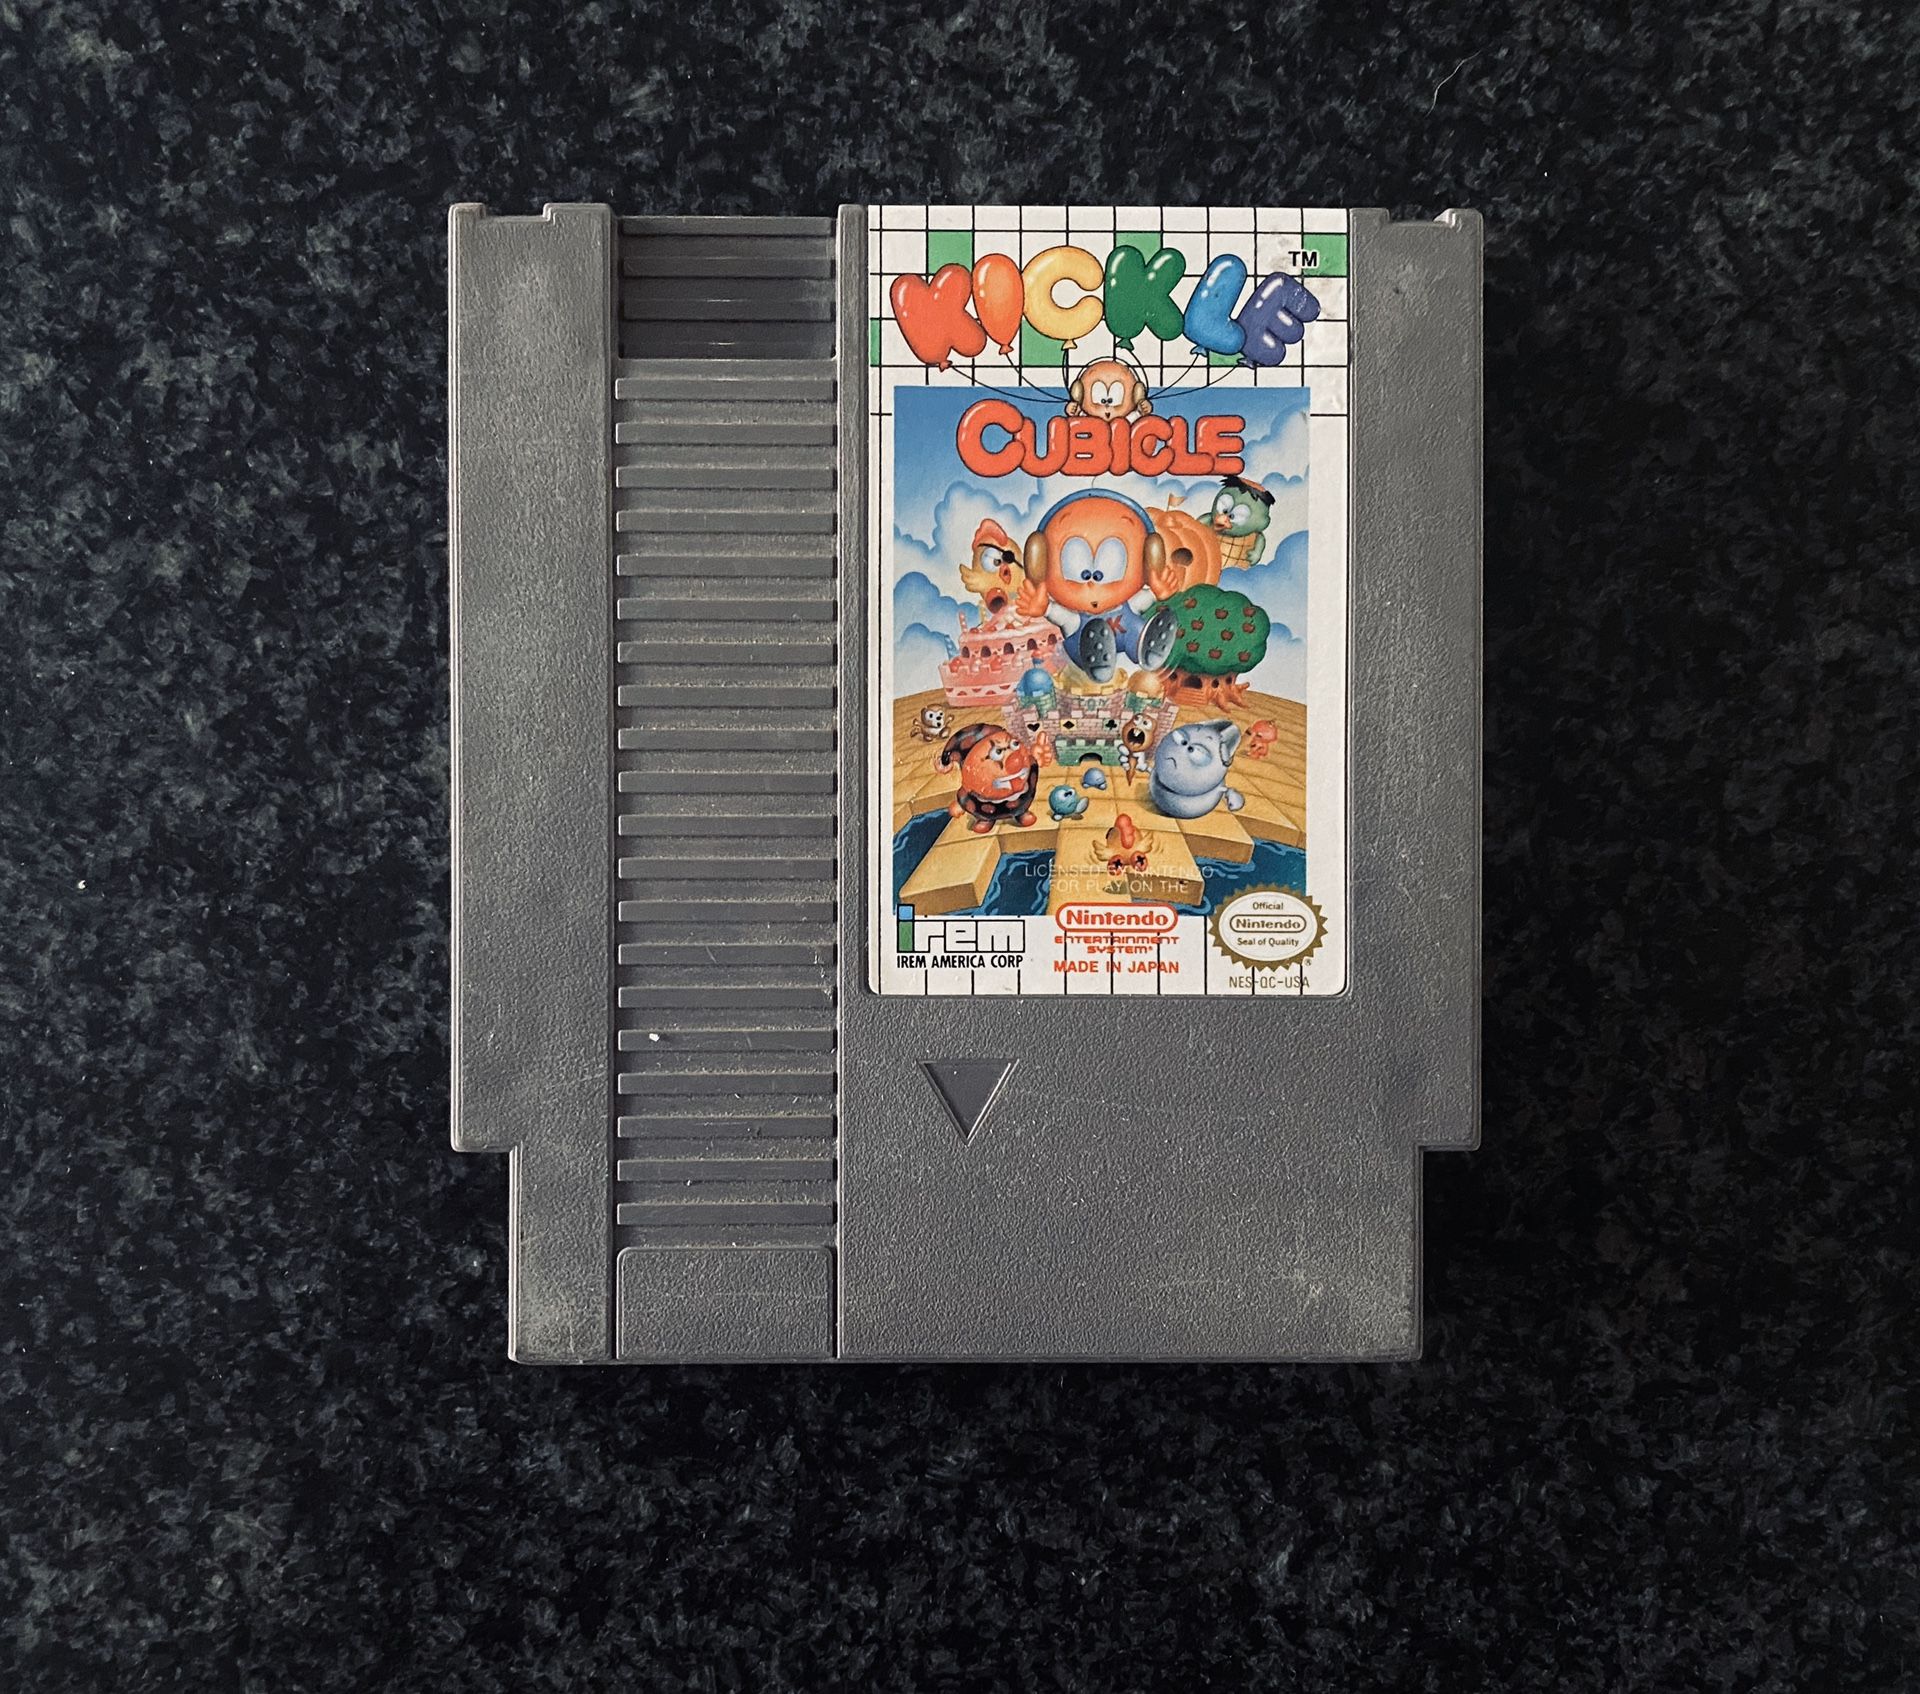 Kickle Cubicle (Nintendo Entertainment System, 1990)